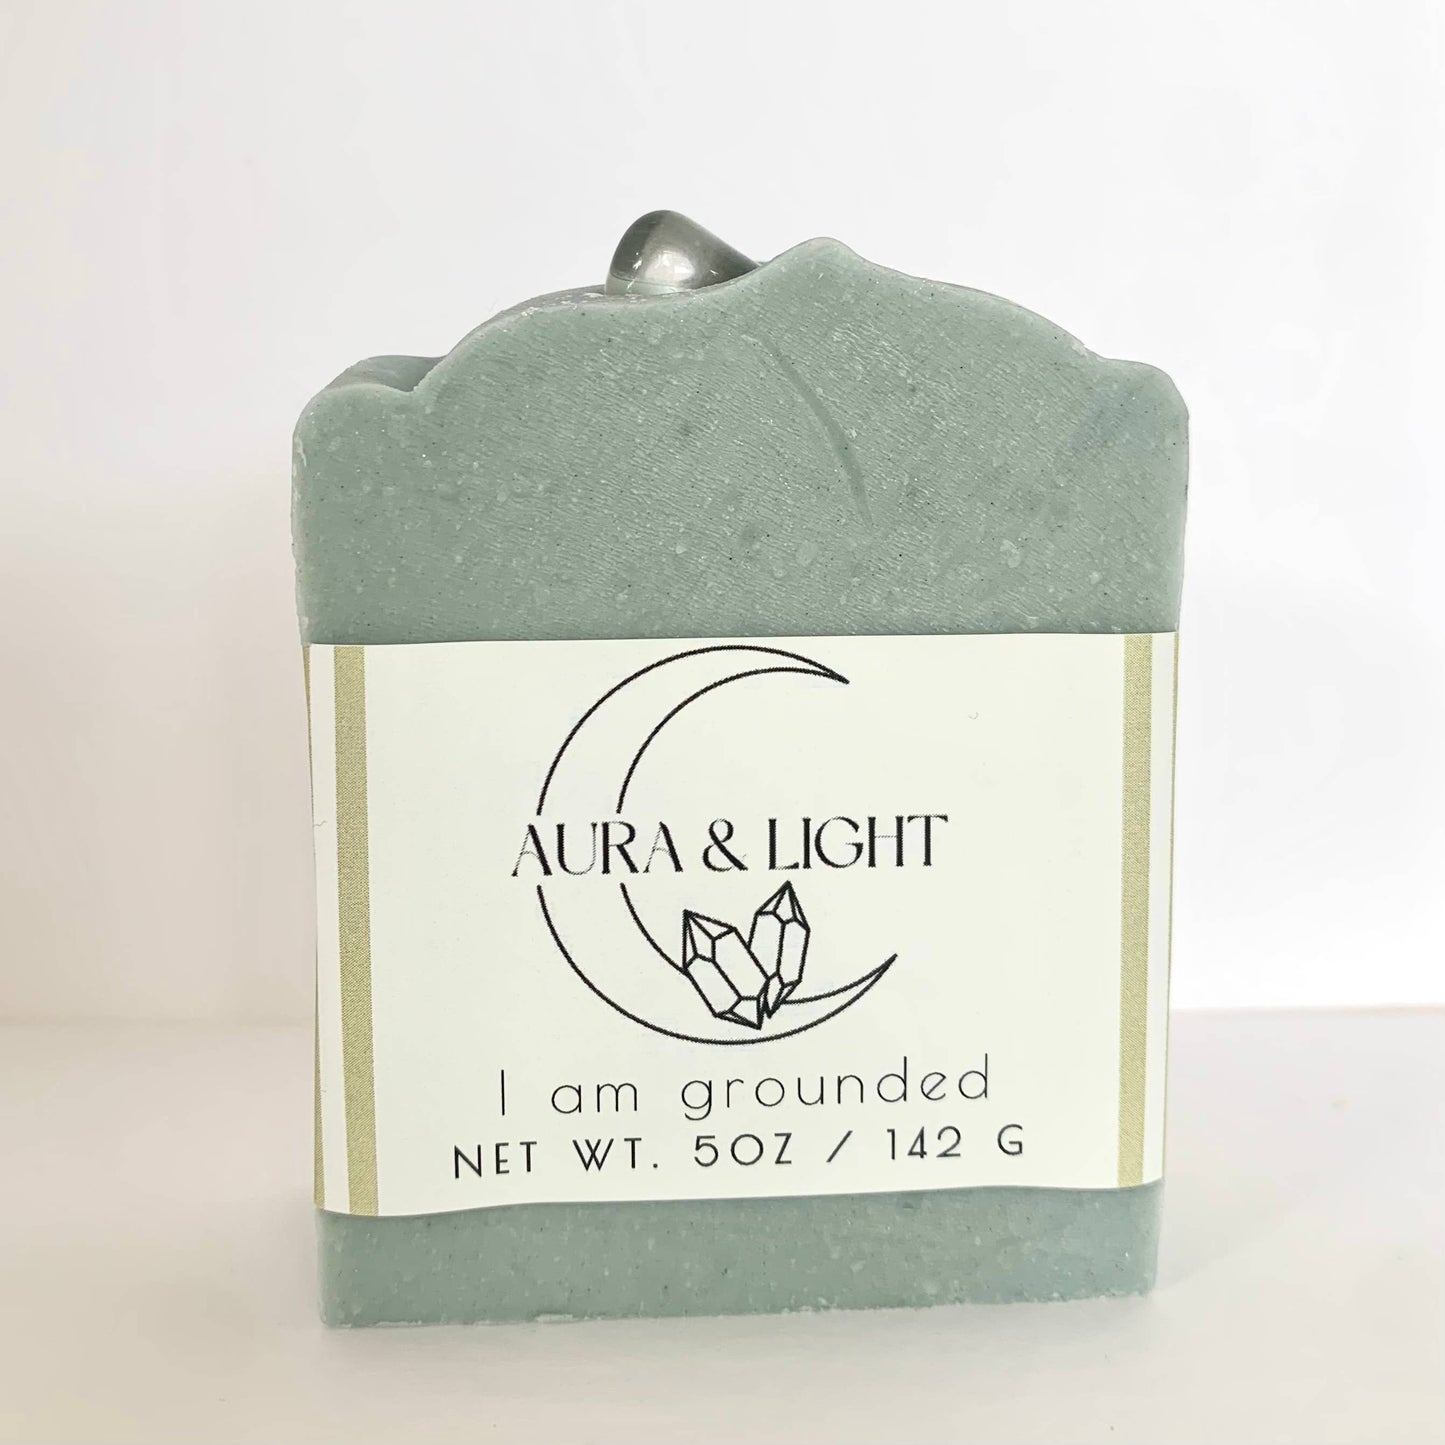 I am grounded - Aura & Light Crystal Soap - Pluff Mud Mercantile